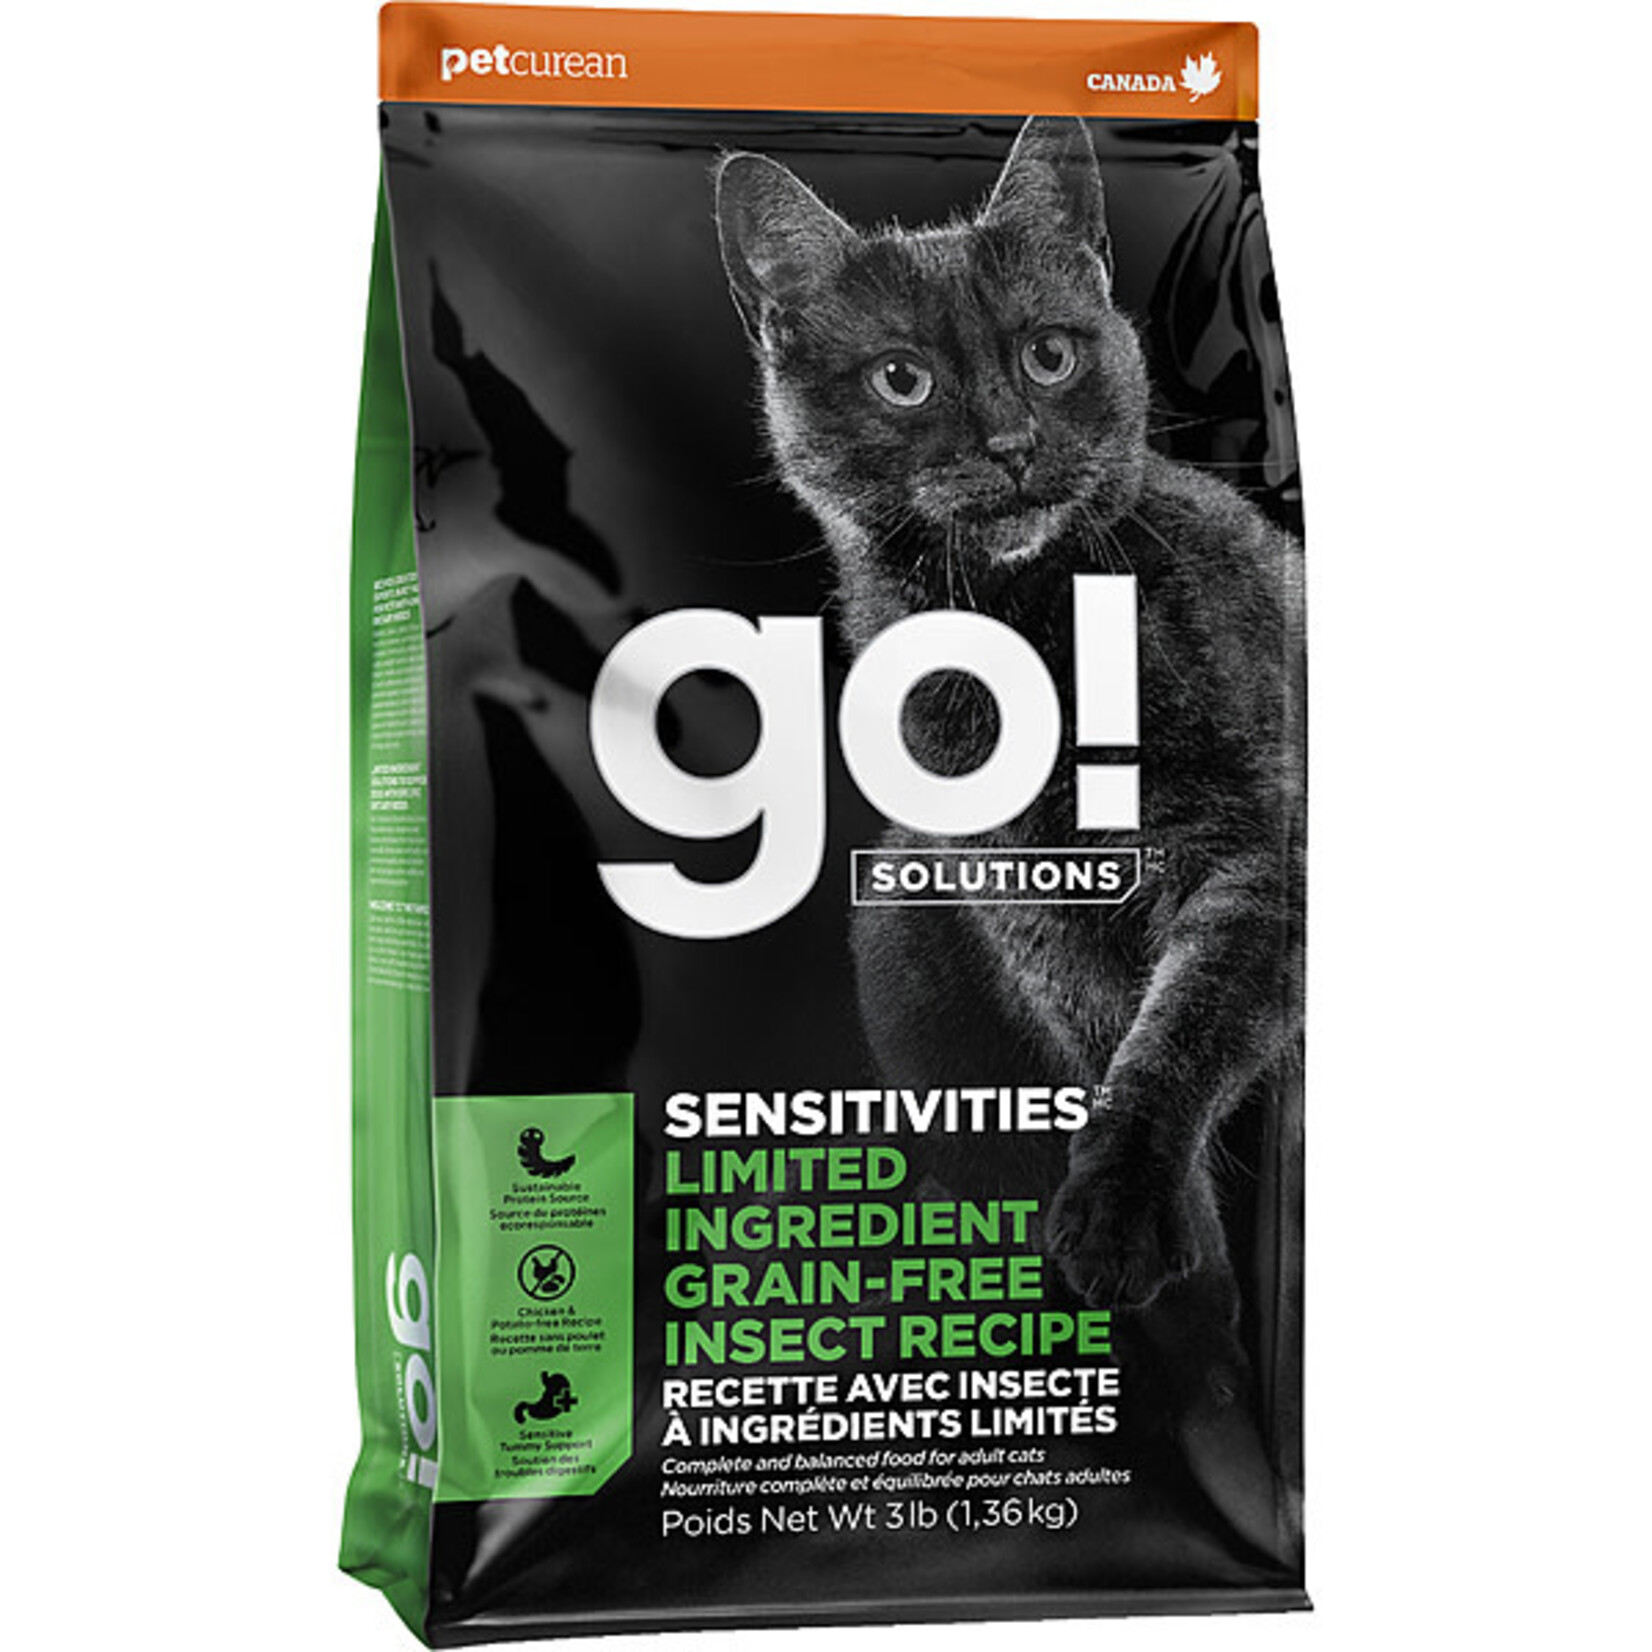 Go! go! Cat Sensitivities LID grain free Insect recipe